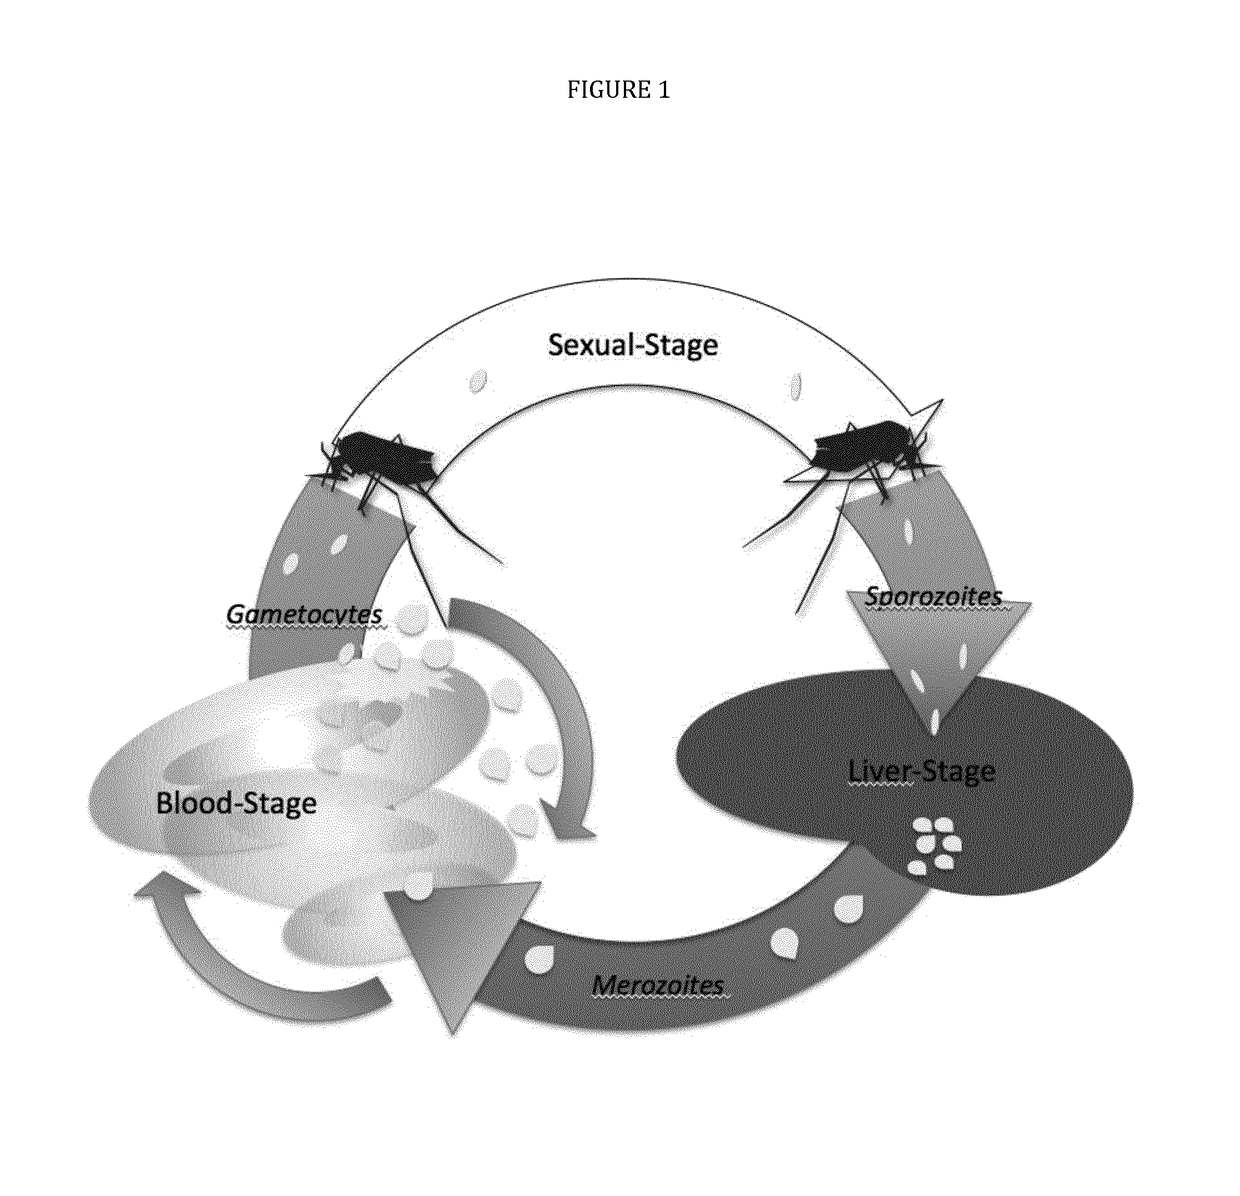 Multi-component-multistage malaria vaccines